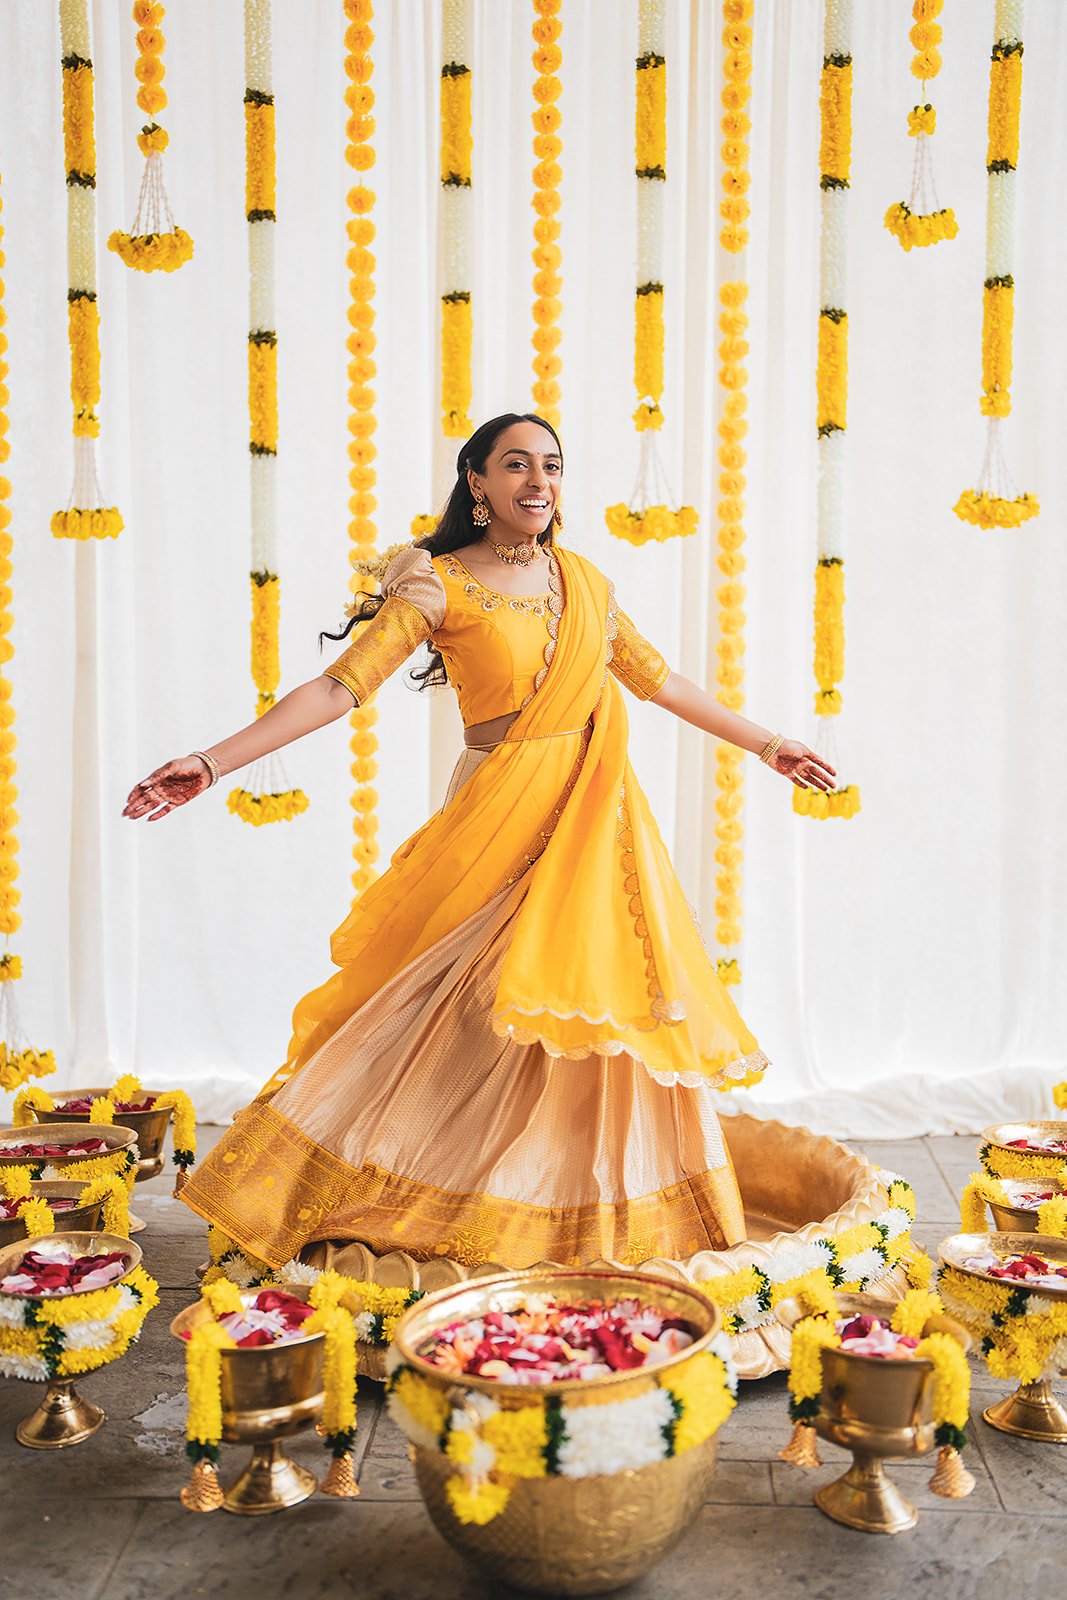 Bridal haldi in yellow dress pose ideas